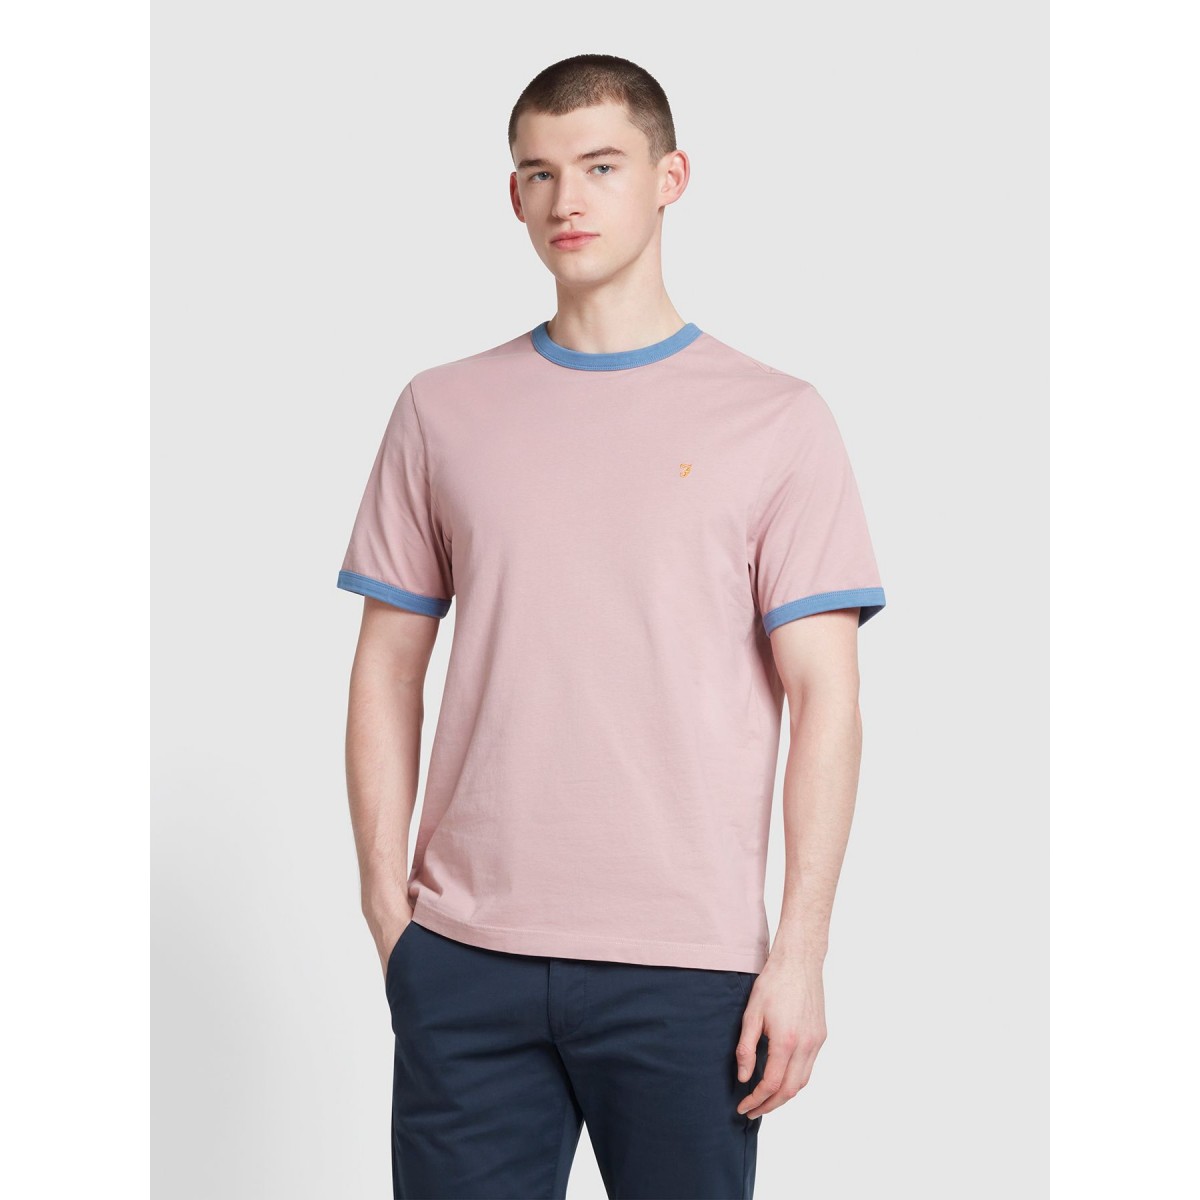 FARAH - T-shirt rose et bleu